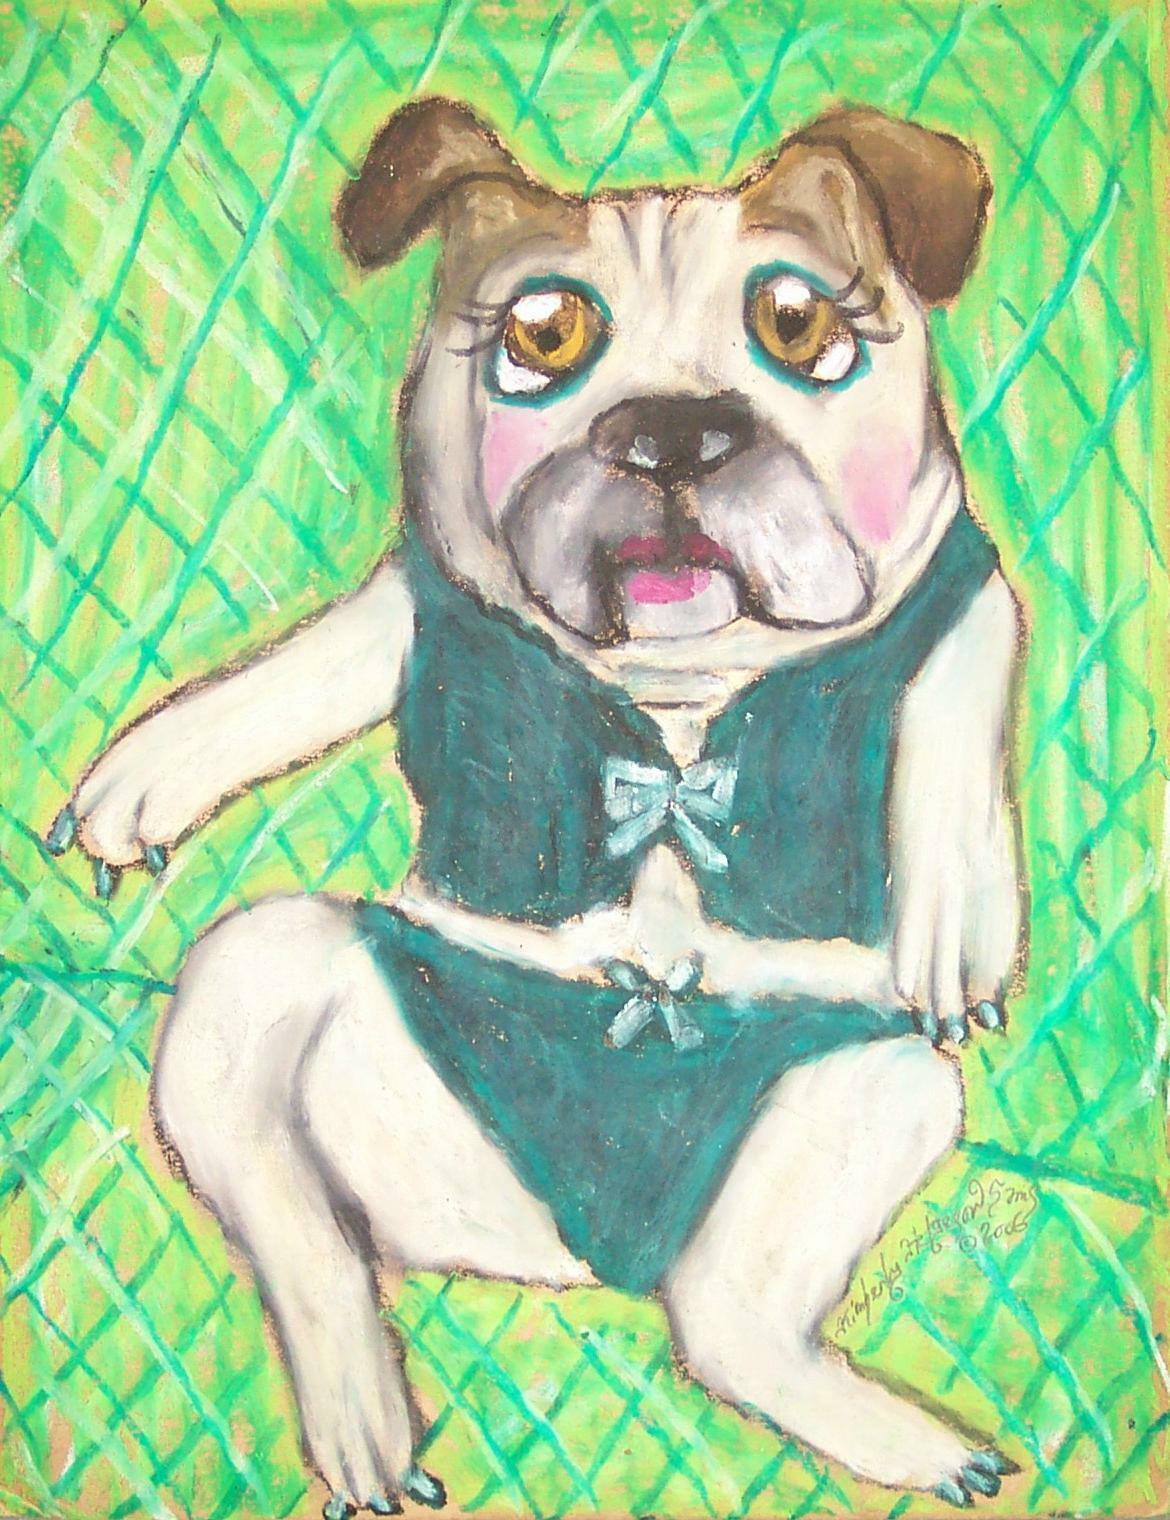 Bulldog Victoria Secret Model Art Print 4x6 Dog Collectible Artist Signed KSams